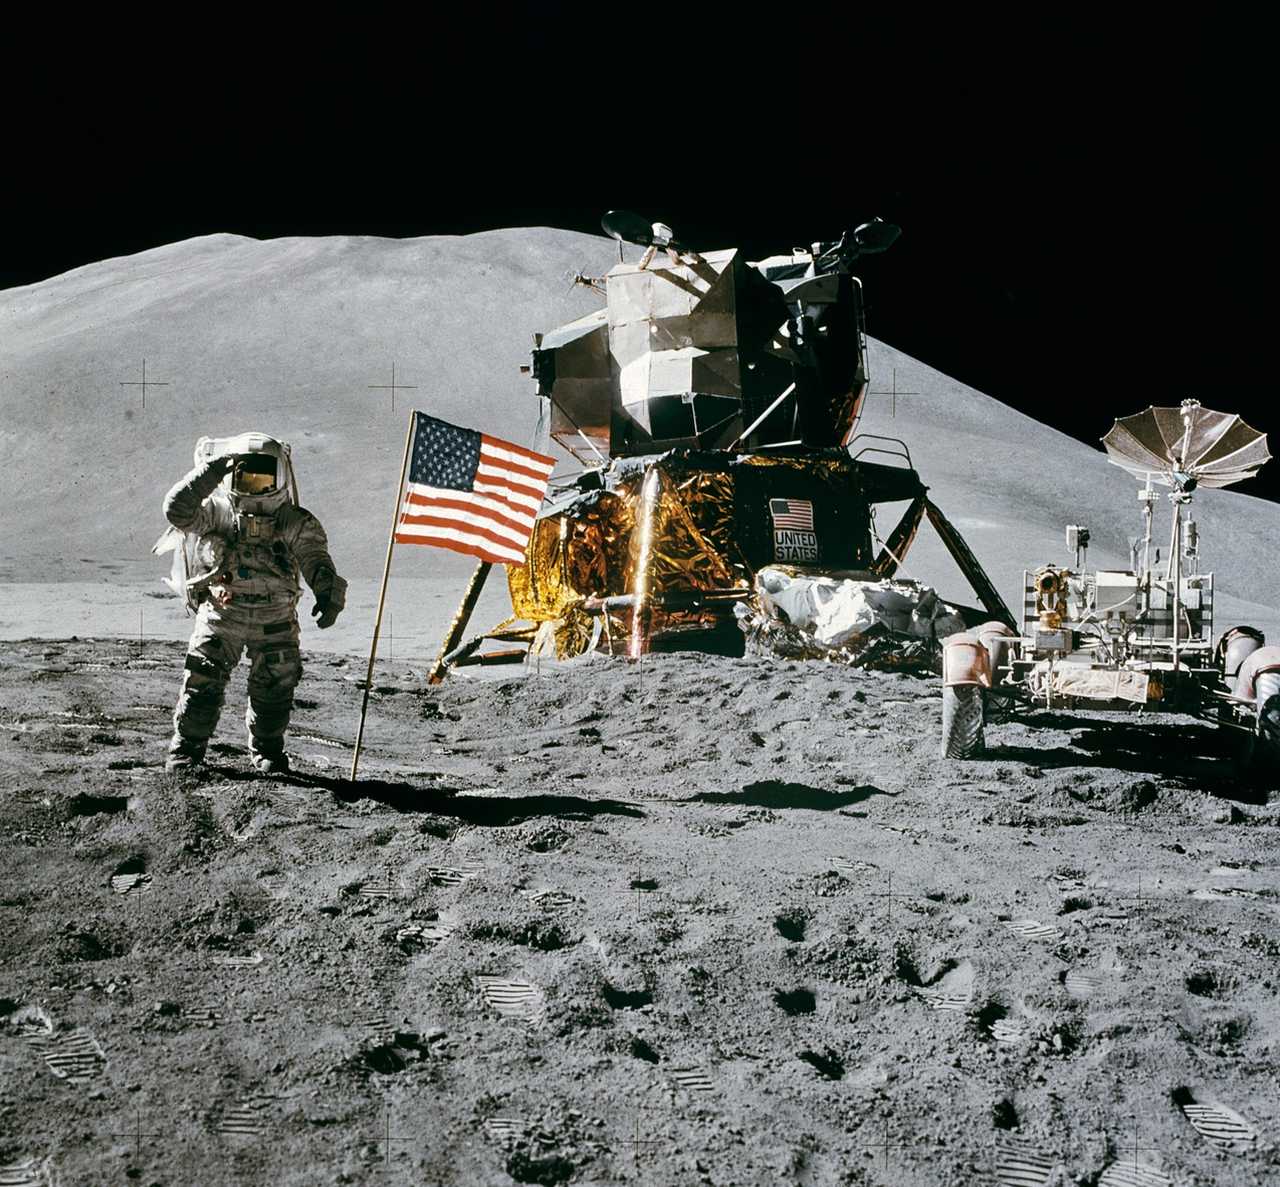 lunar landing module